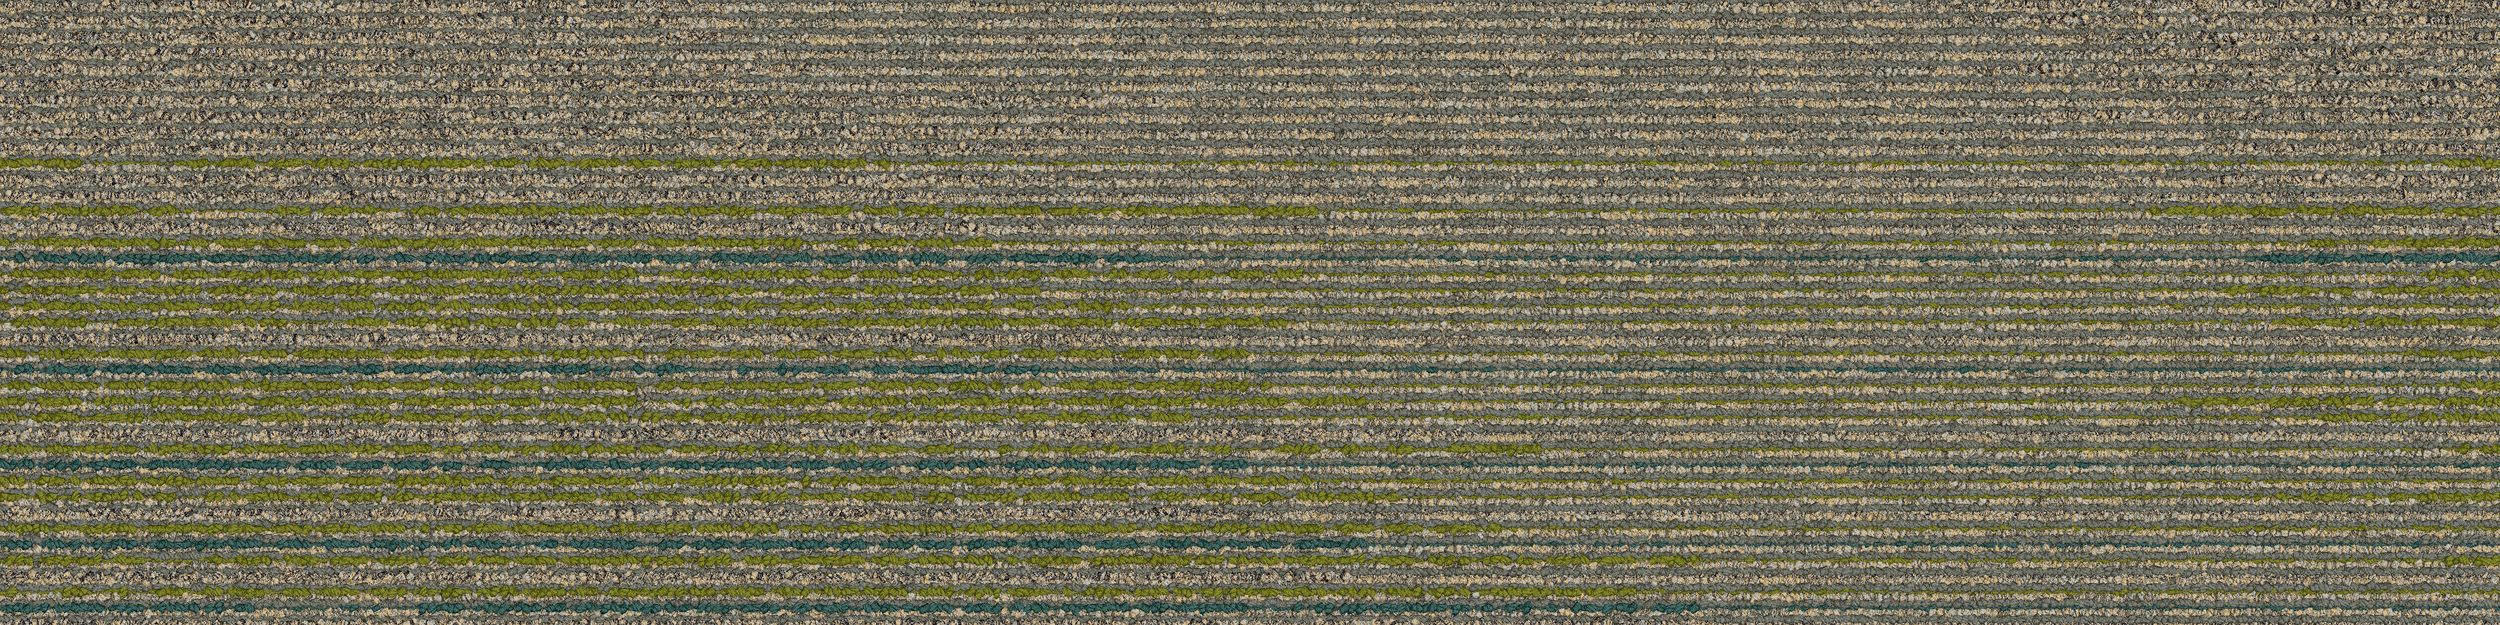 Ground Waves Verse Carpet Tile in Gull/Colors imagen número 2